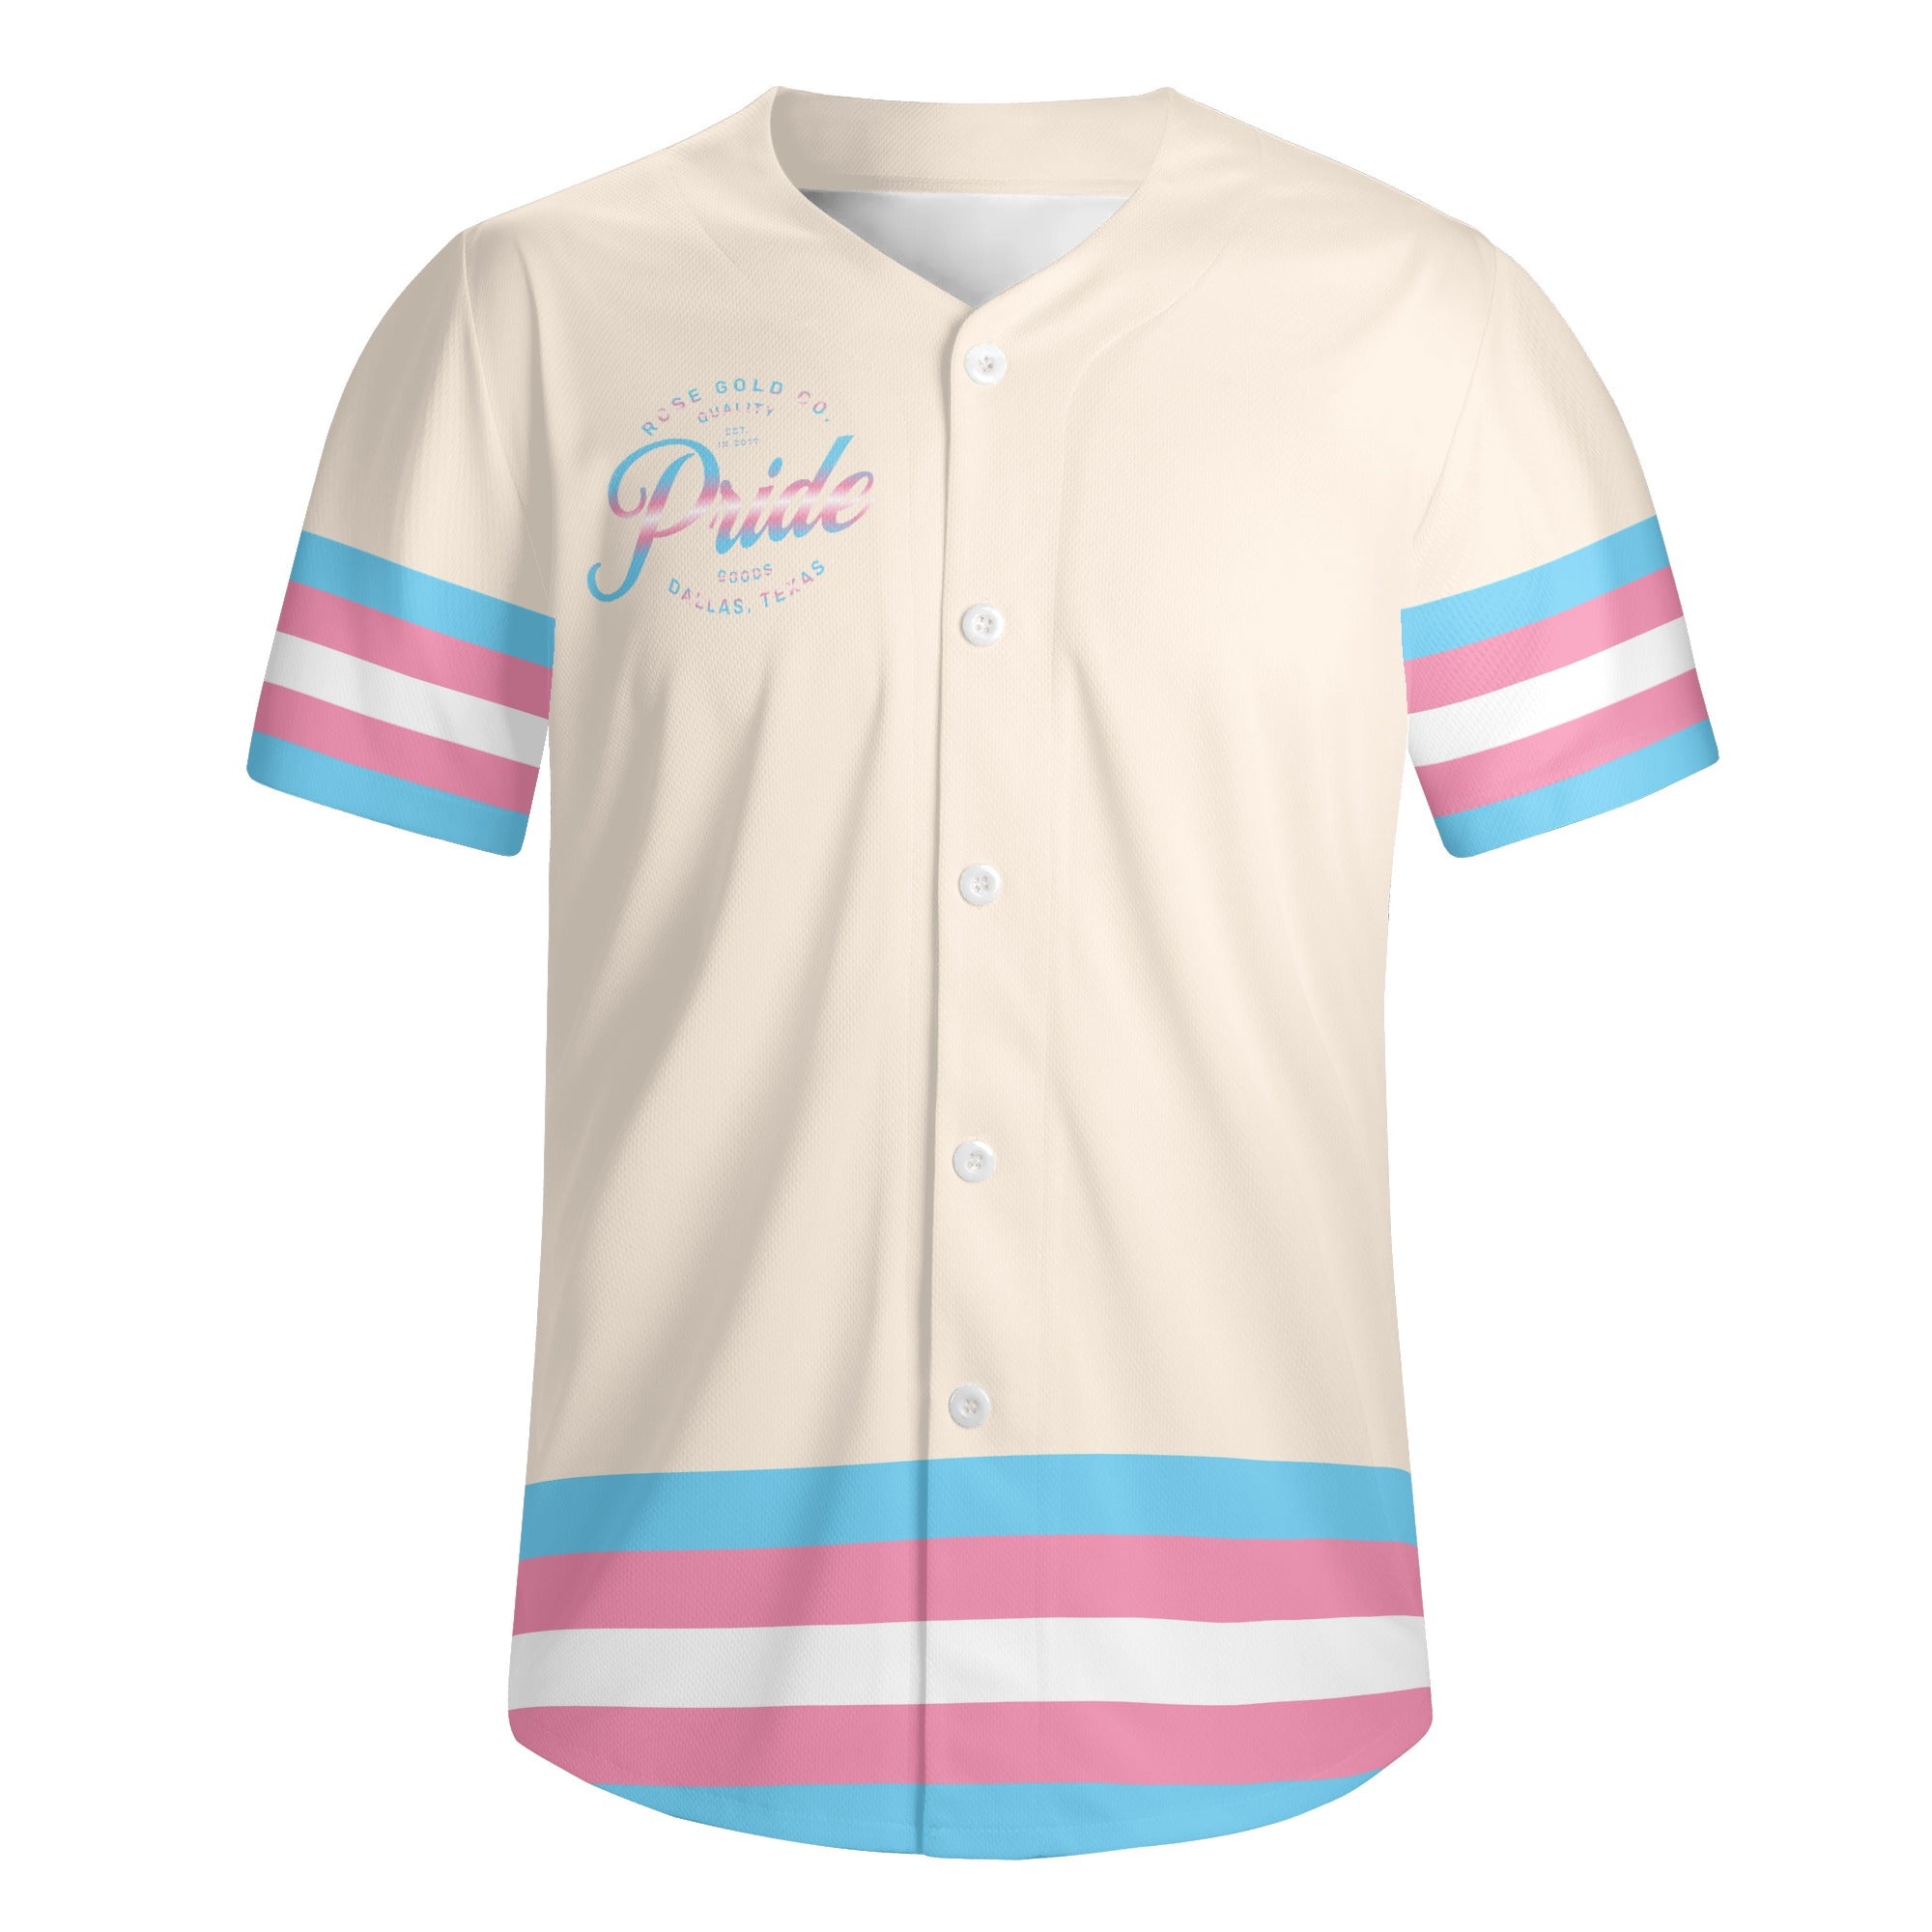 Trans Pride Tan Baseball Jersey - Rose Gold Co. Shop